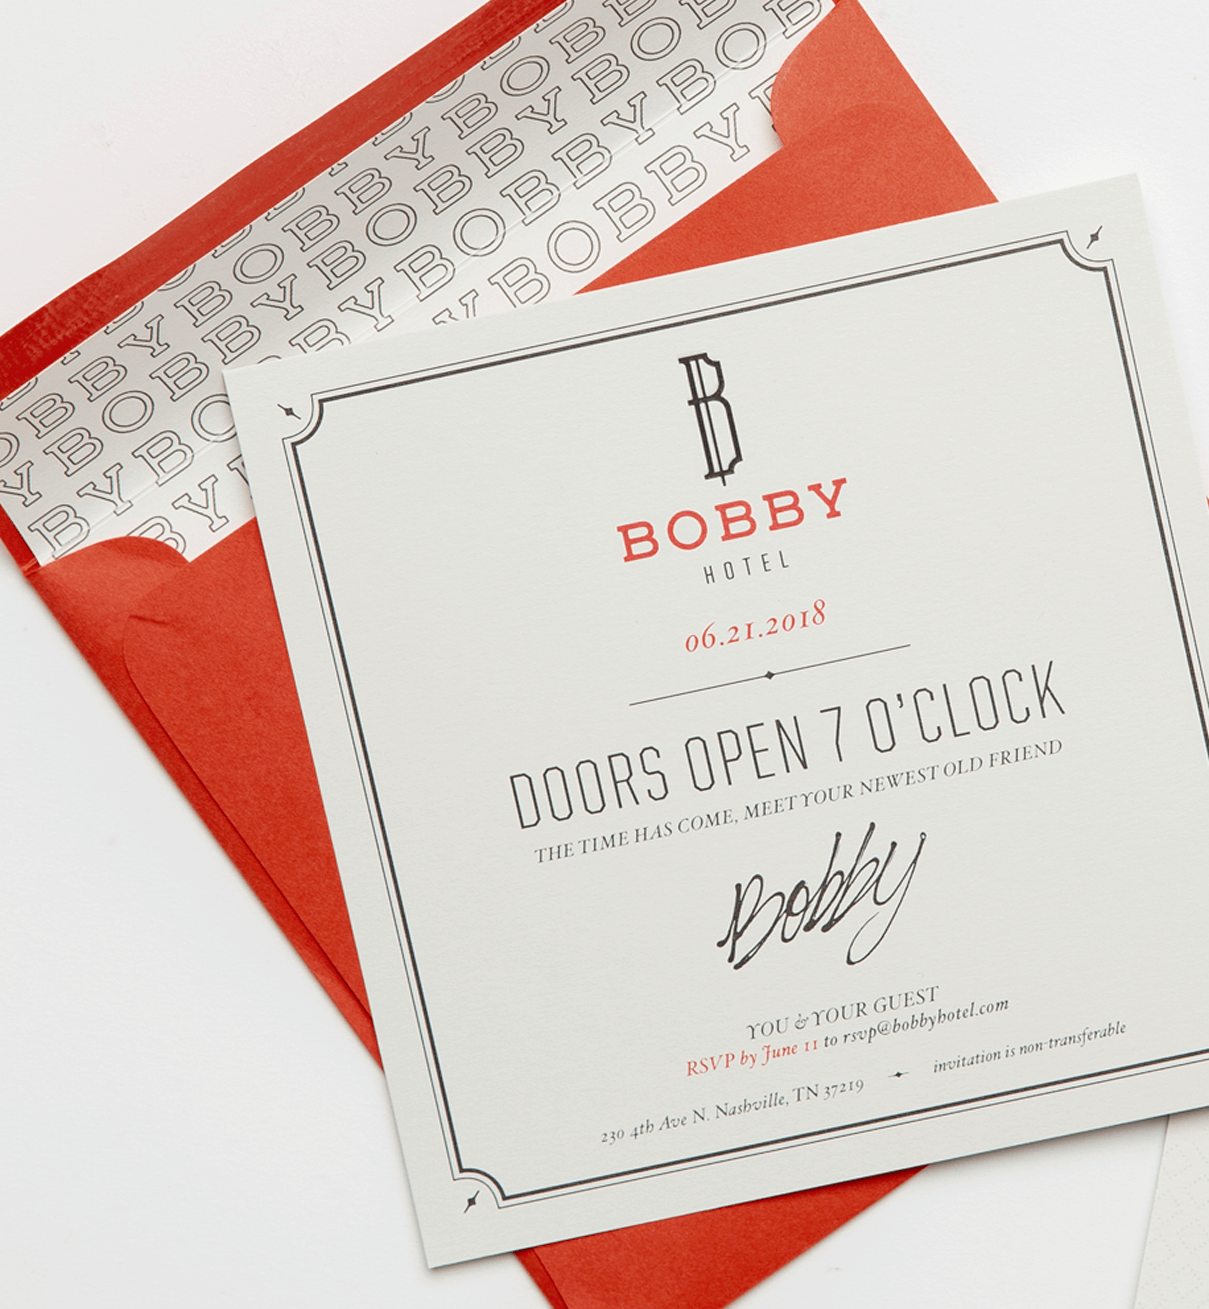 Bobby Hotel Grand Opening Envelopes in Nashville, TN